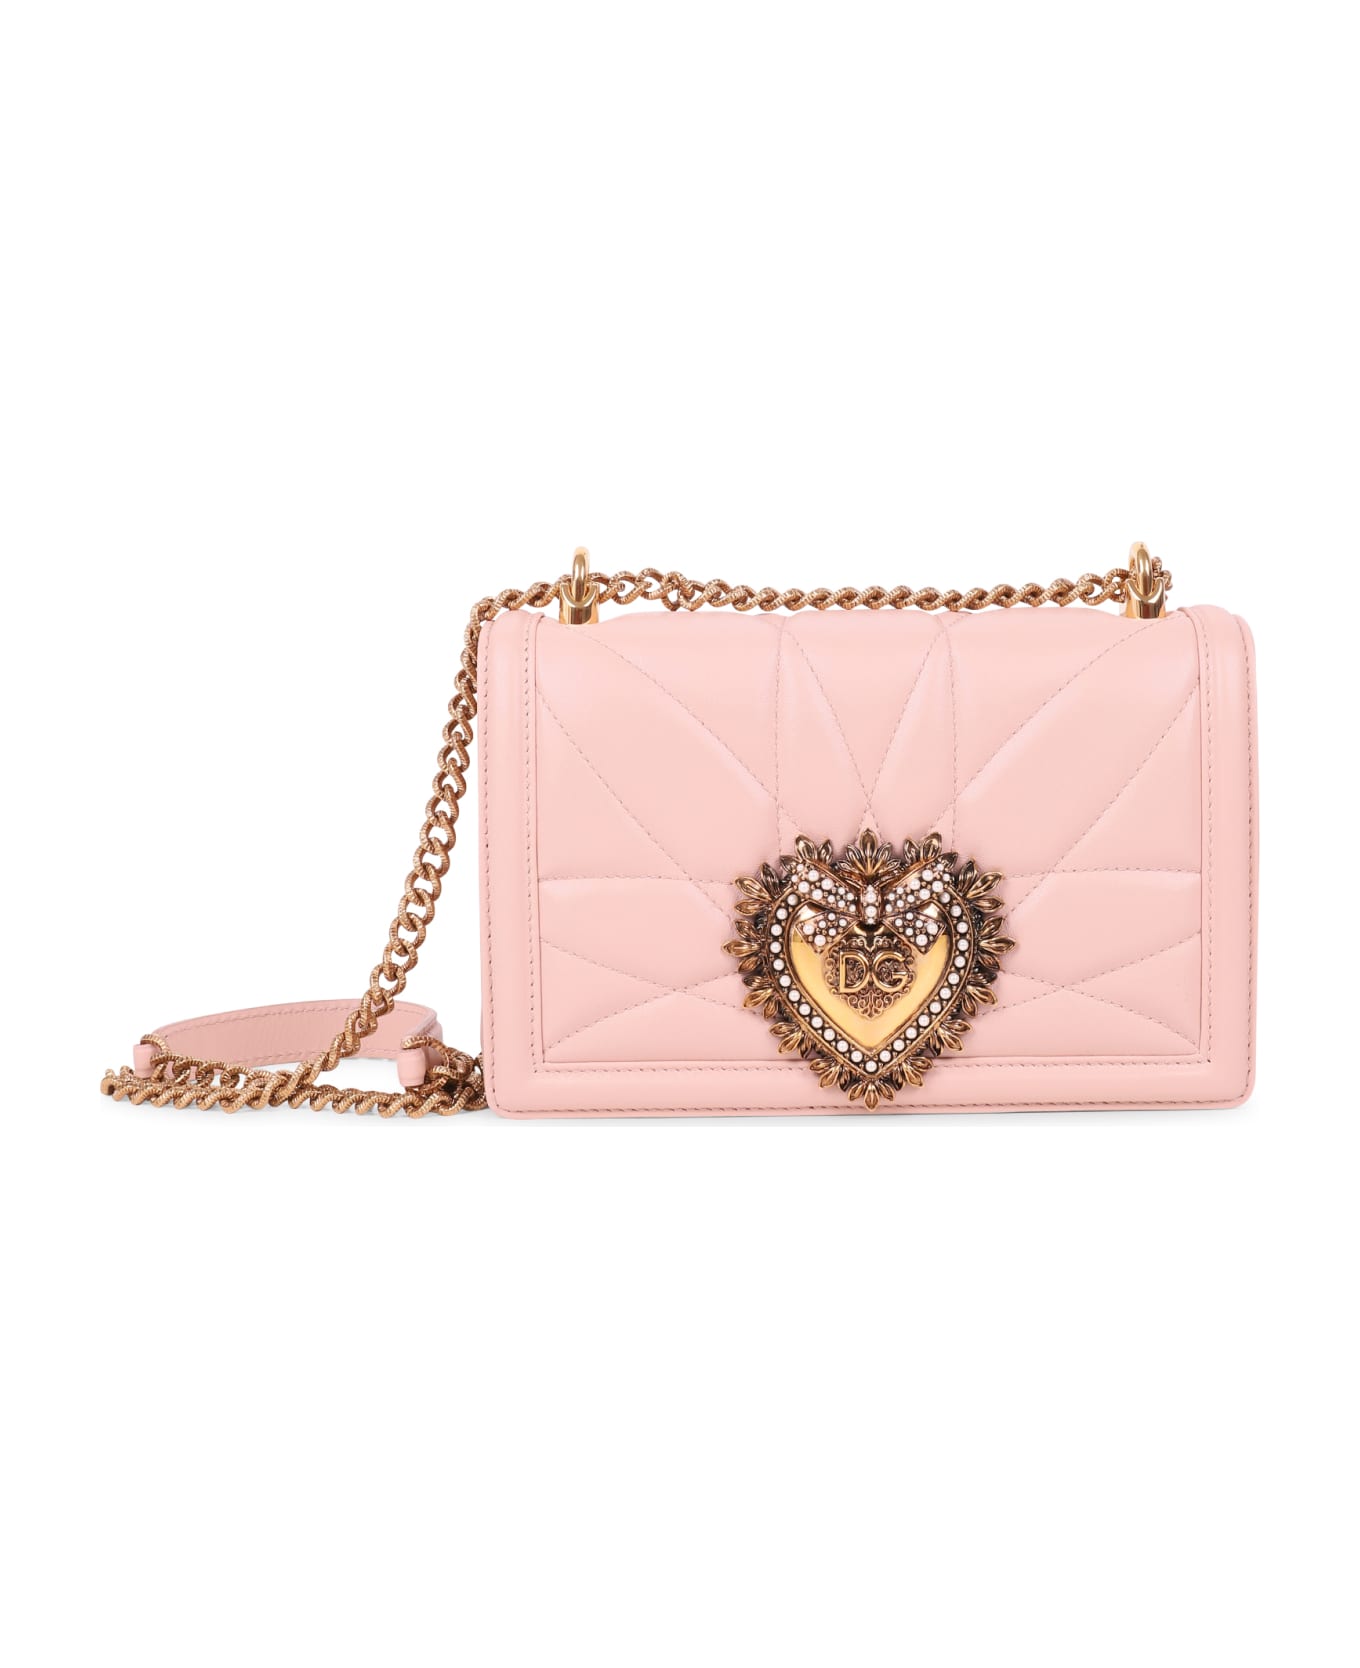 Dolce & Gabbana Blush Devotion Bag M | italist